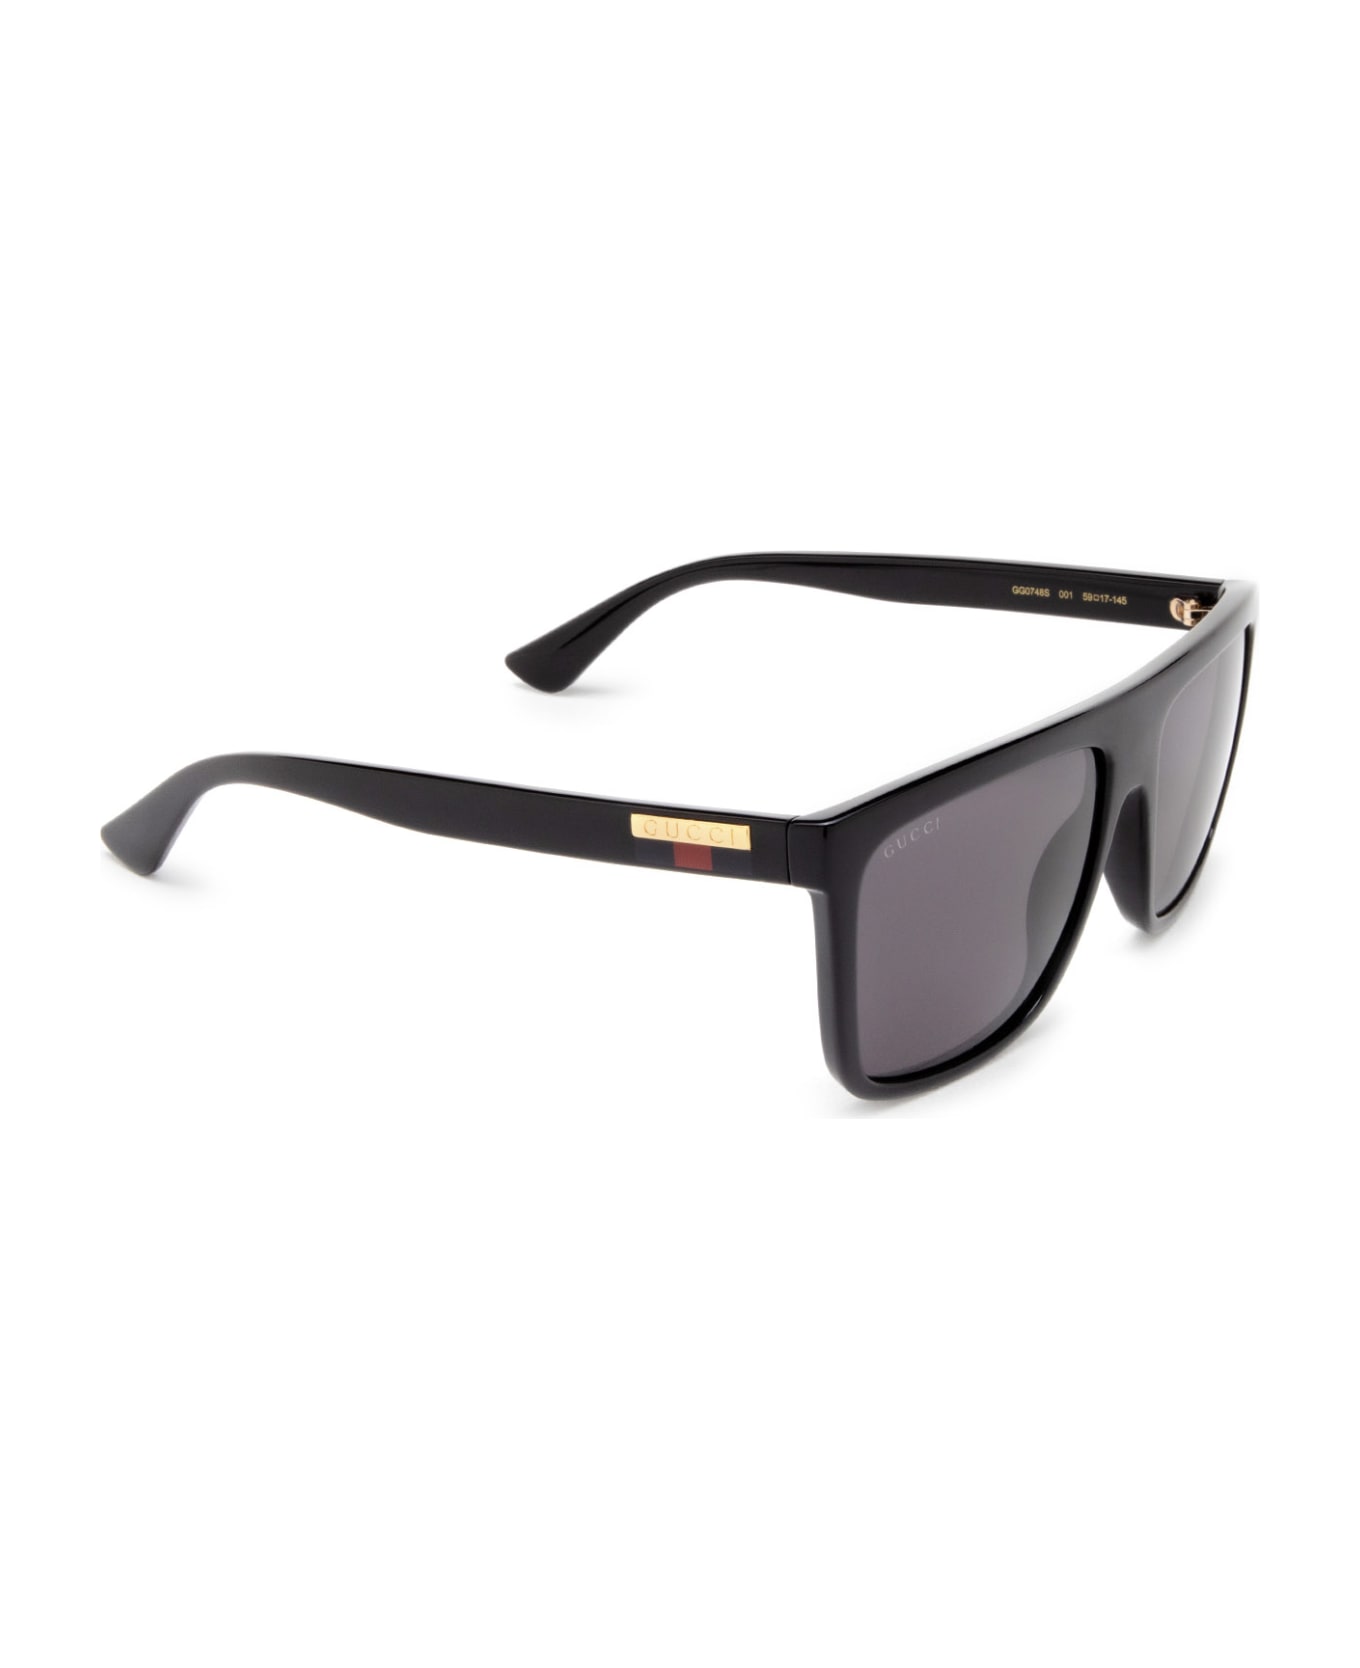 Gucci Eyewear Gg0748s Black Sunglasses - Black